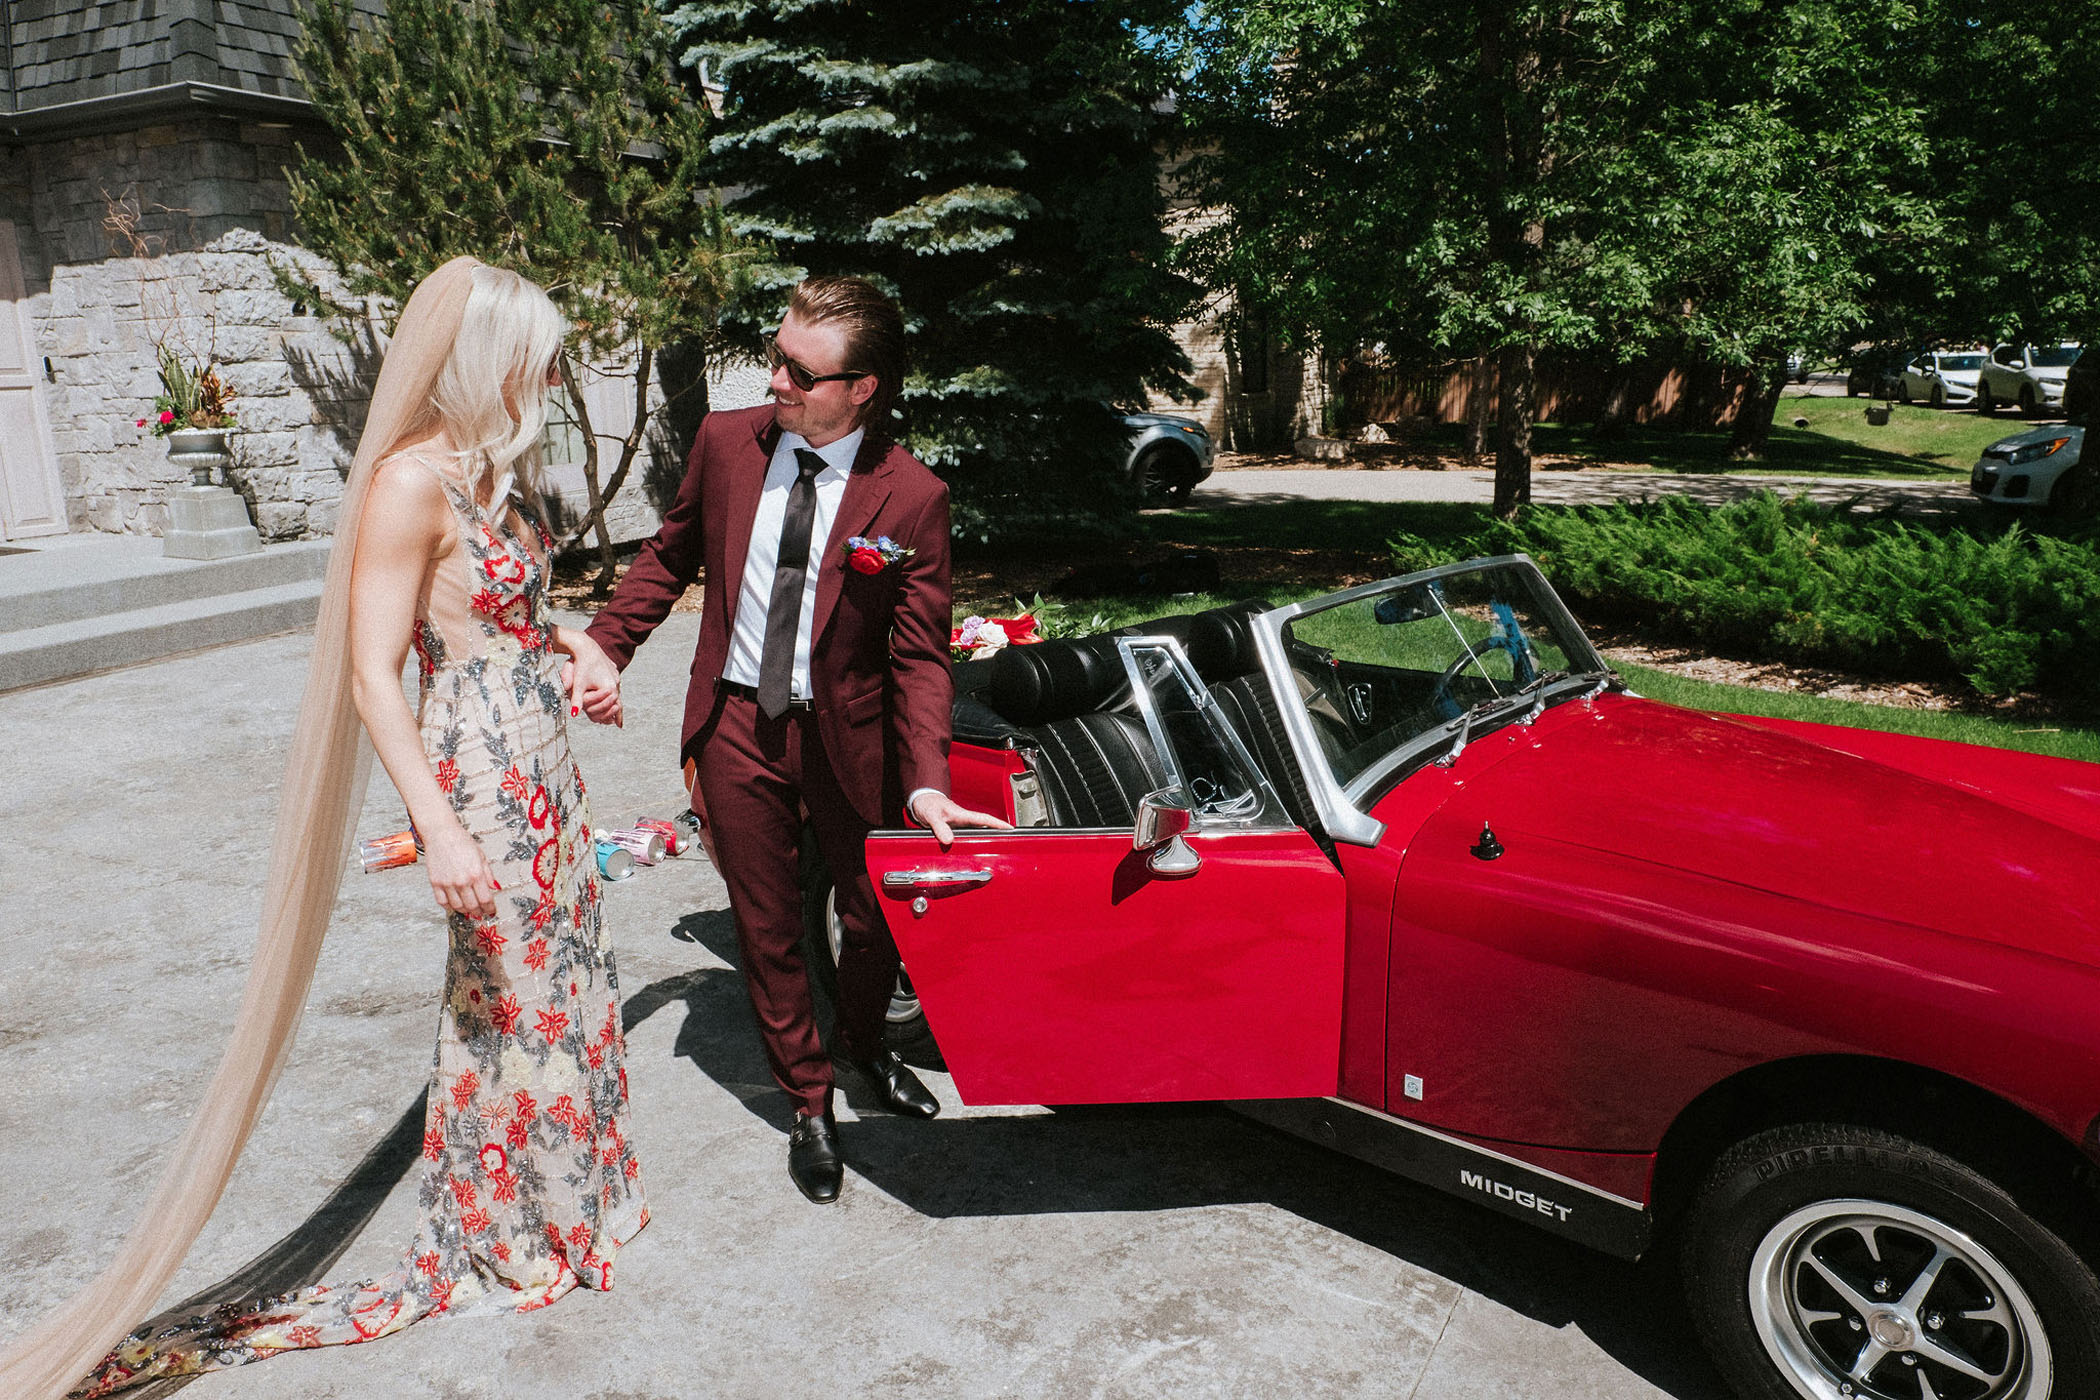 Canada's Colorful Rock 'n' Roll Backyard Anti-Wedding